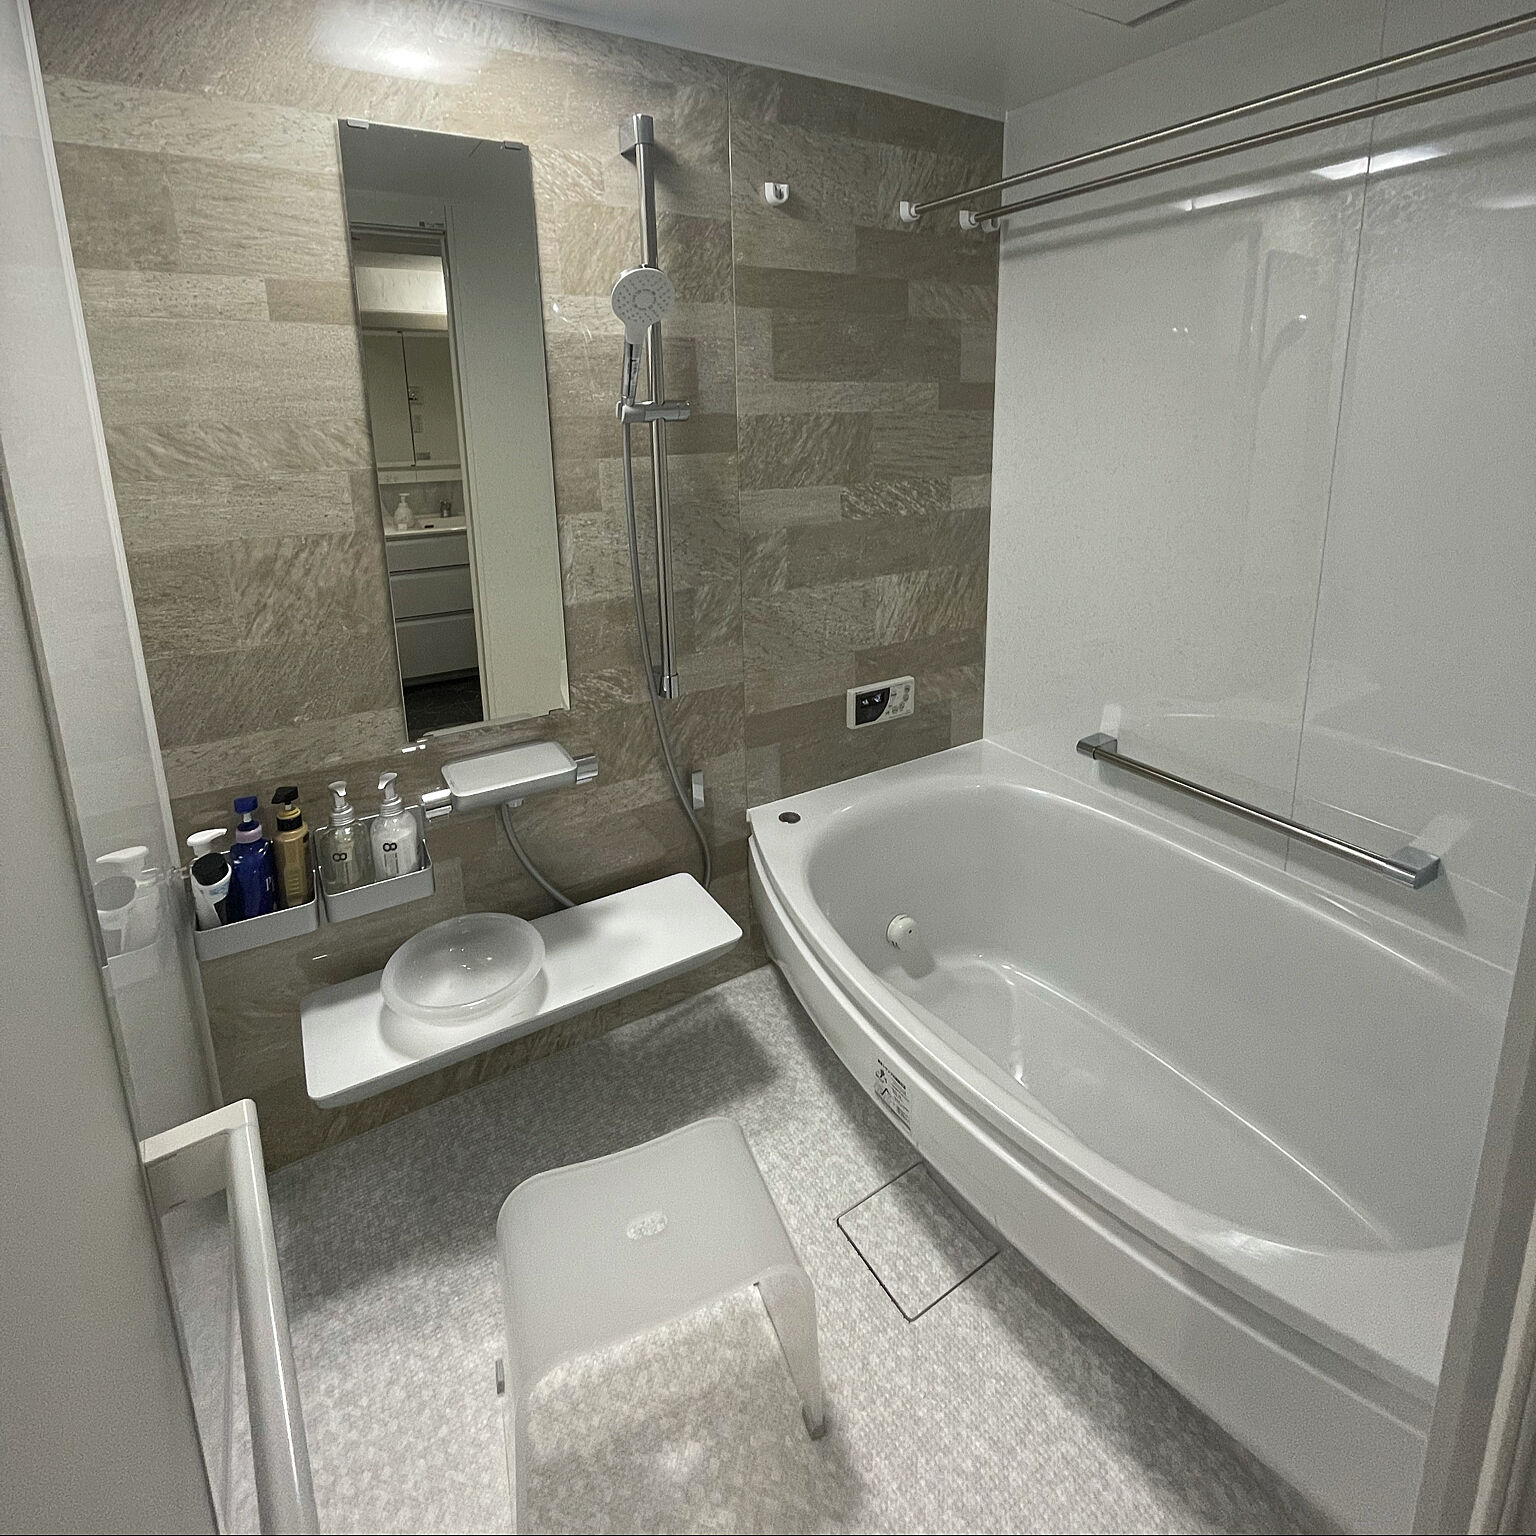 iwashi615,ワイド浴槽,人造大理石浴槽,ゆったりお風呂,パティオベージュ,サザナ1418,浴室乾燥200v電源,毎日浴室乾燥,アクセントパネルは1枚